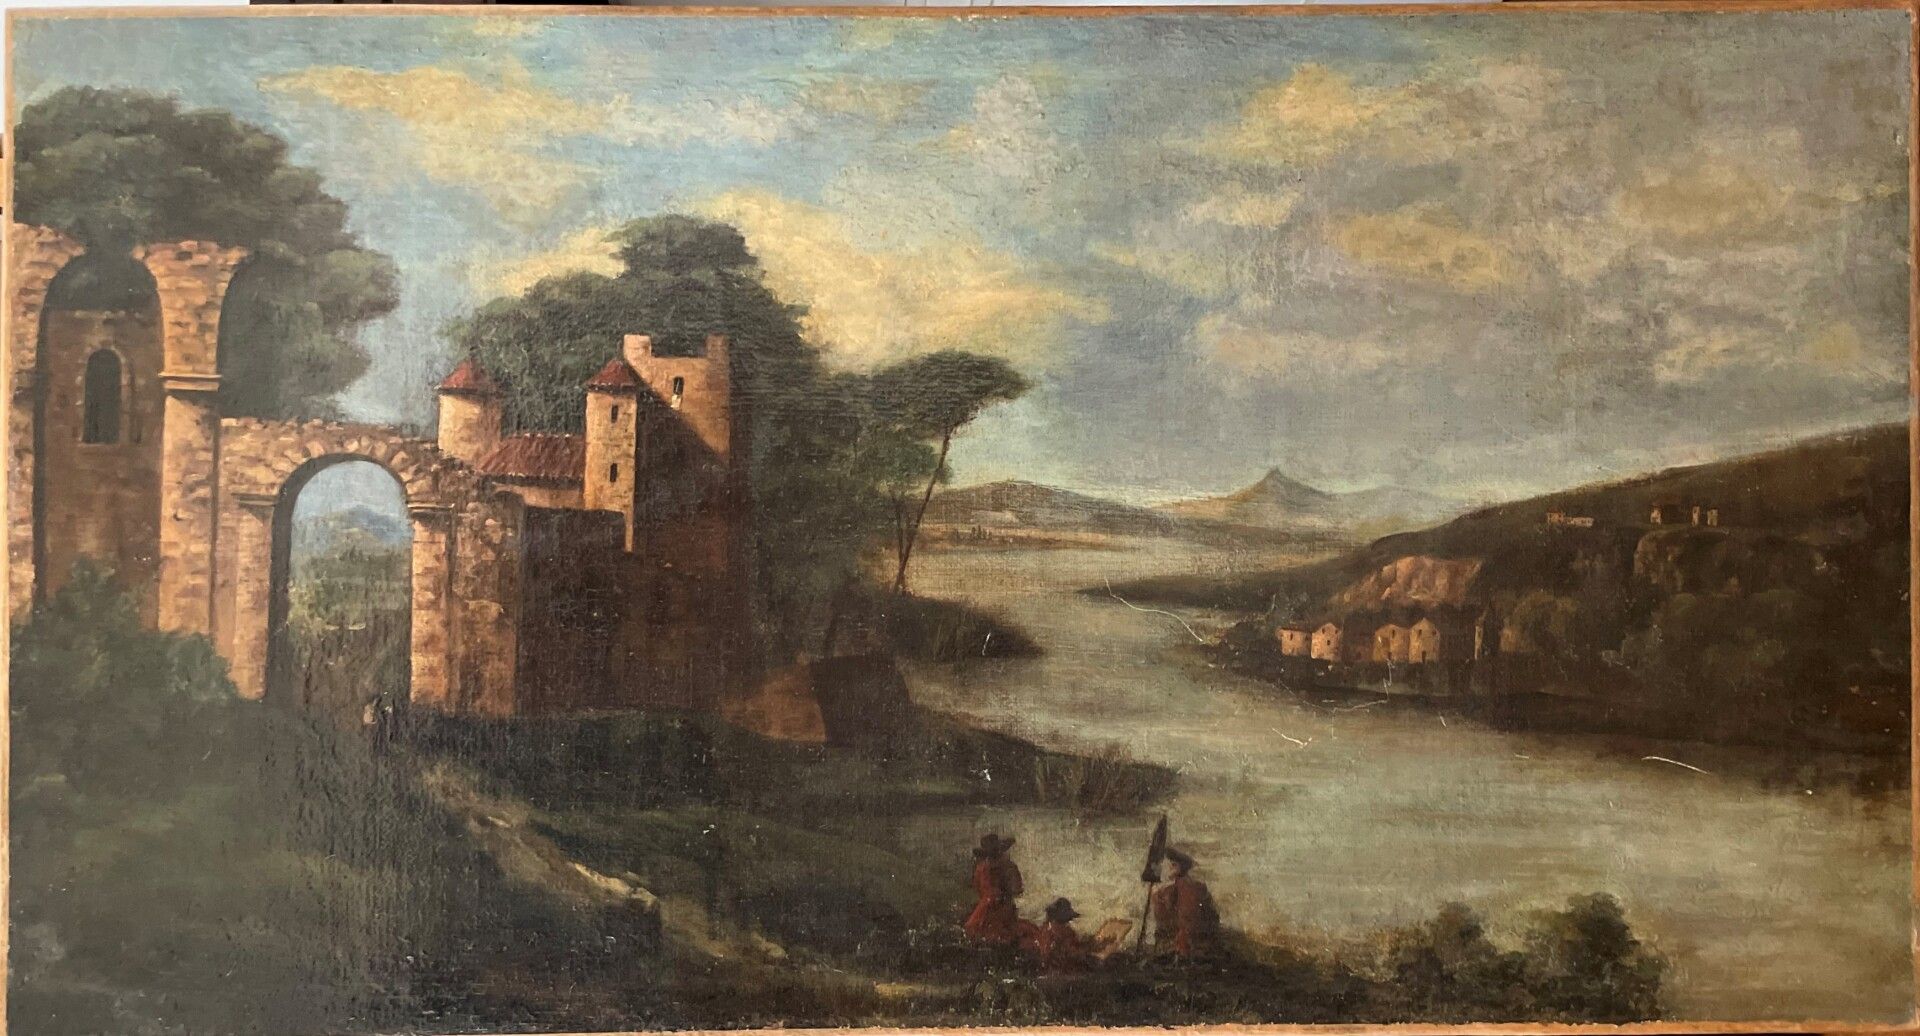 Null 19世纪的学校

河边的废墟景观与人物

布面油画

45,5 x 84 cm

划痕，修复。